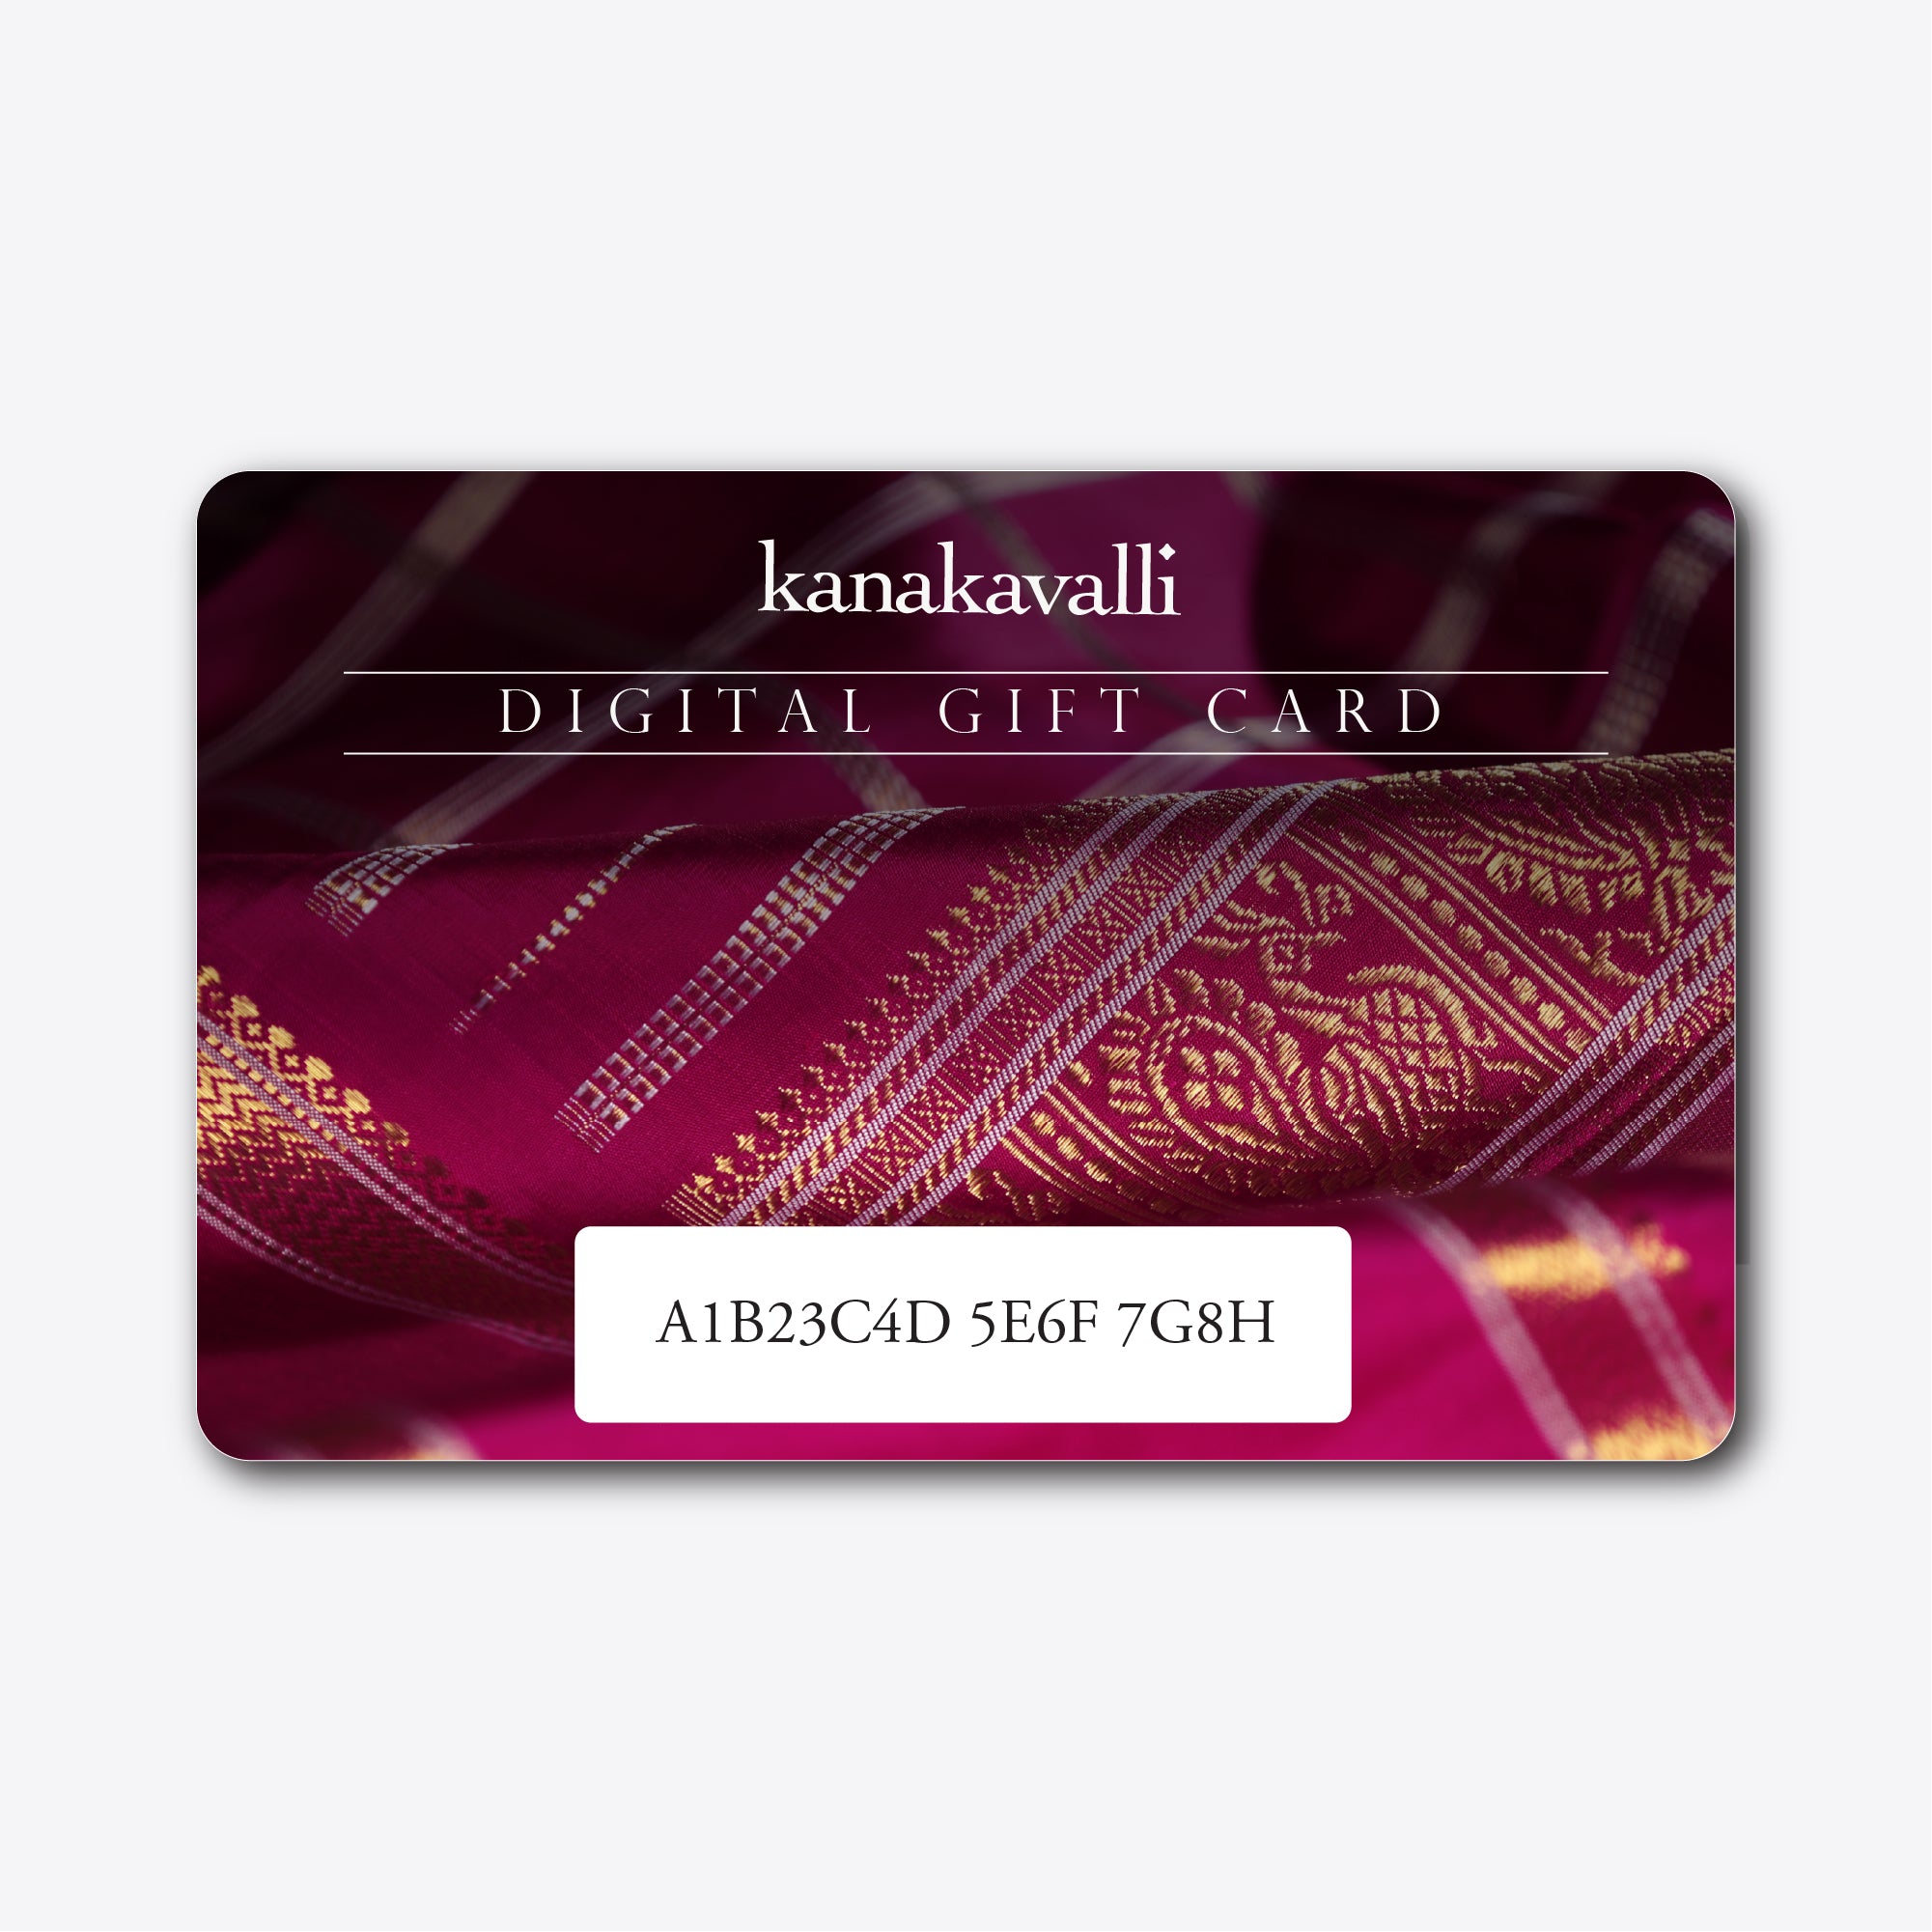 Kanakavalli Digital Gift Card